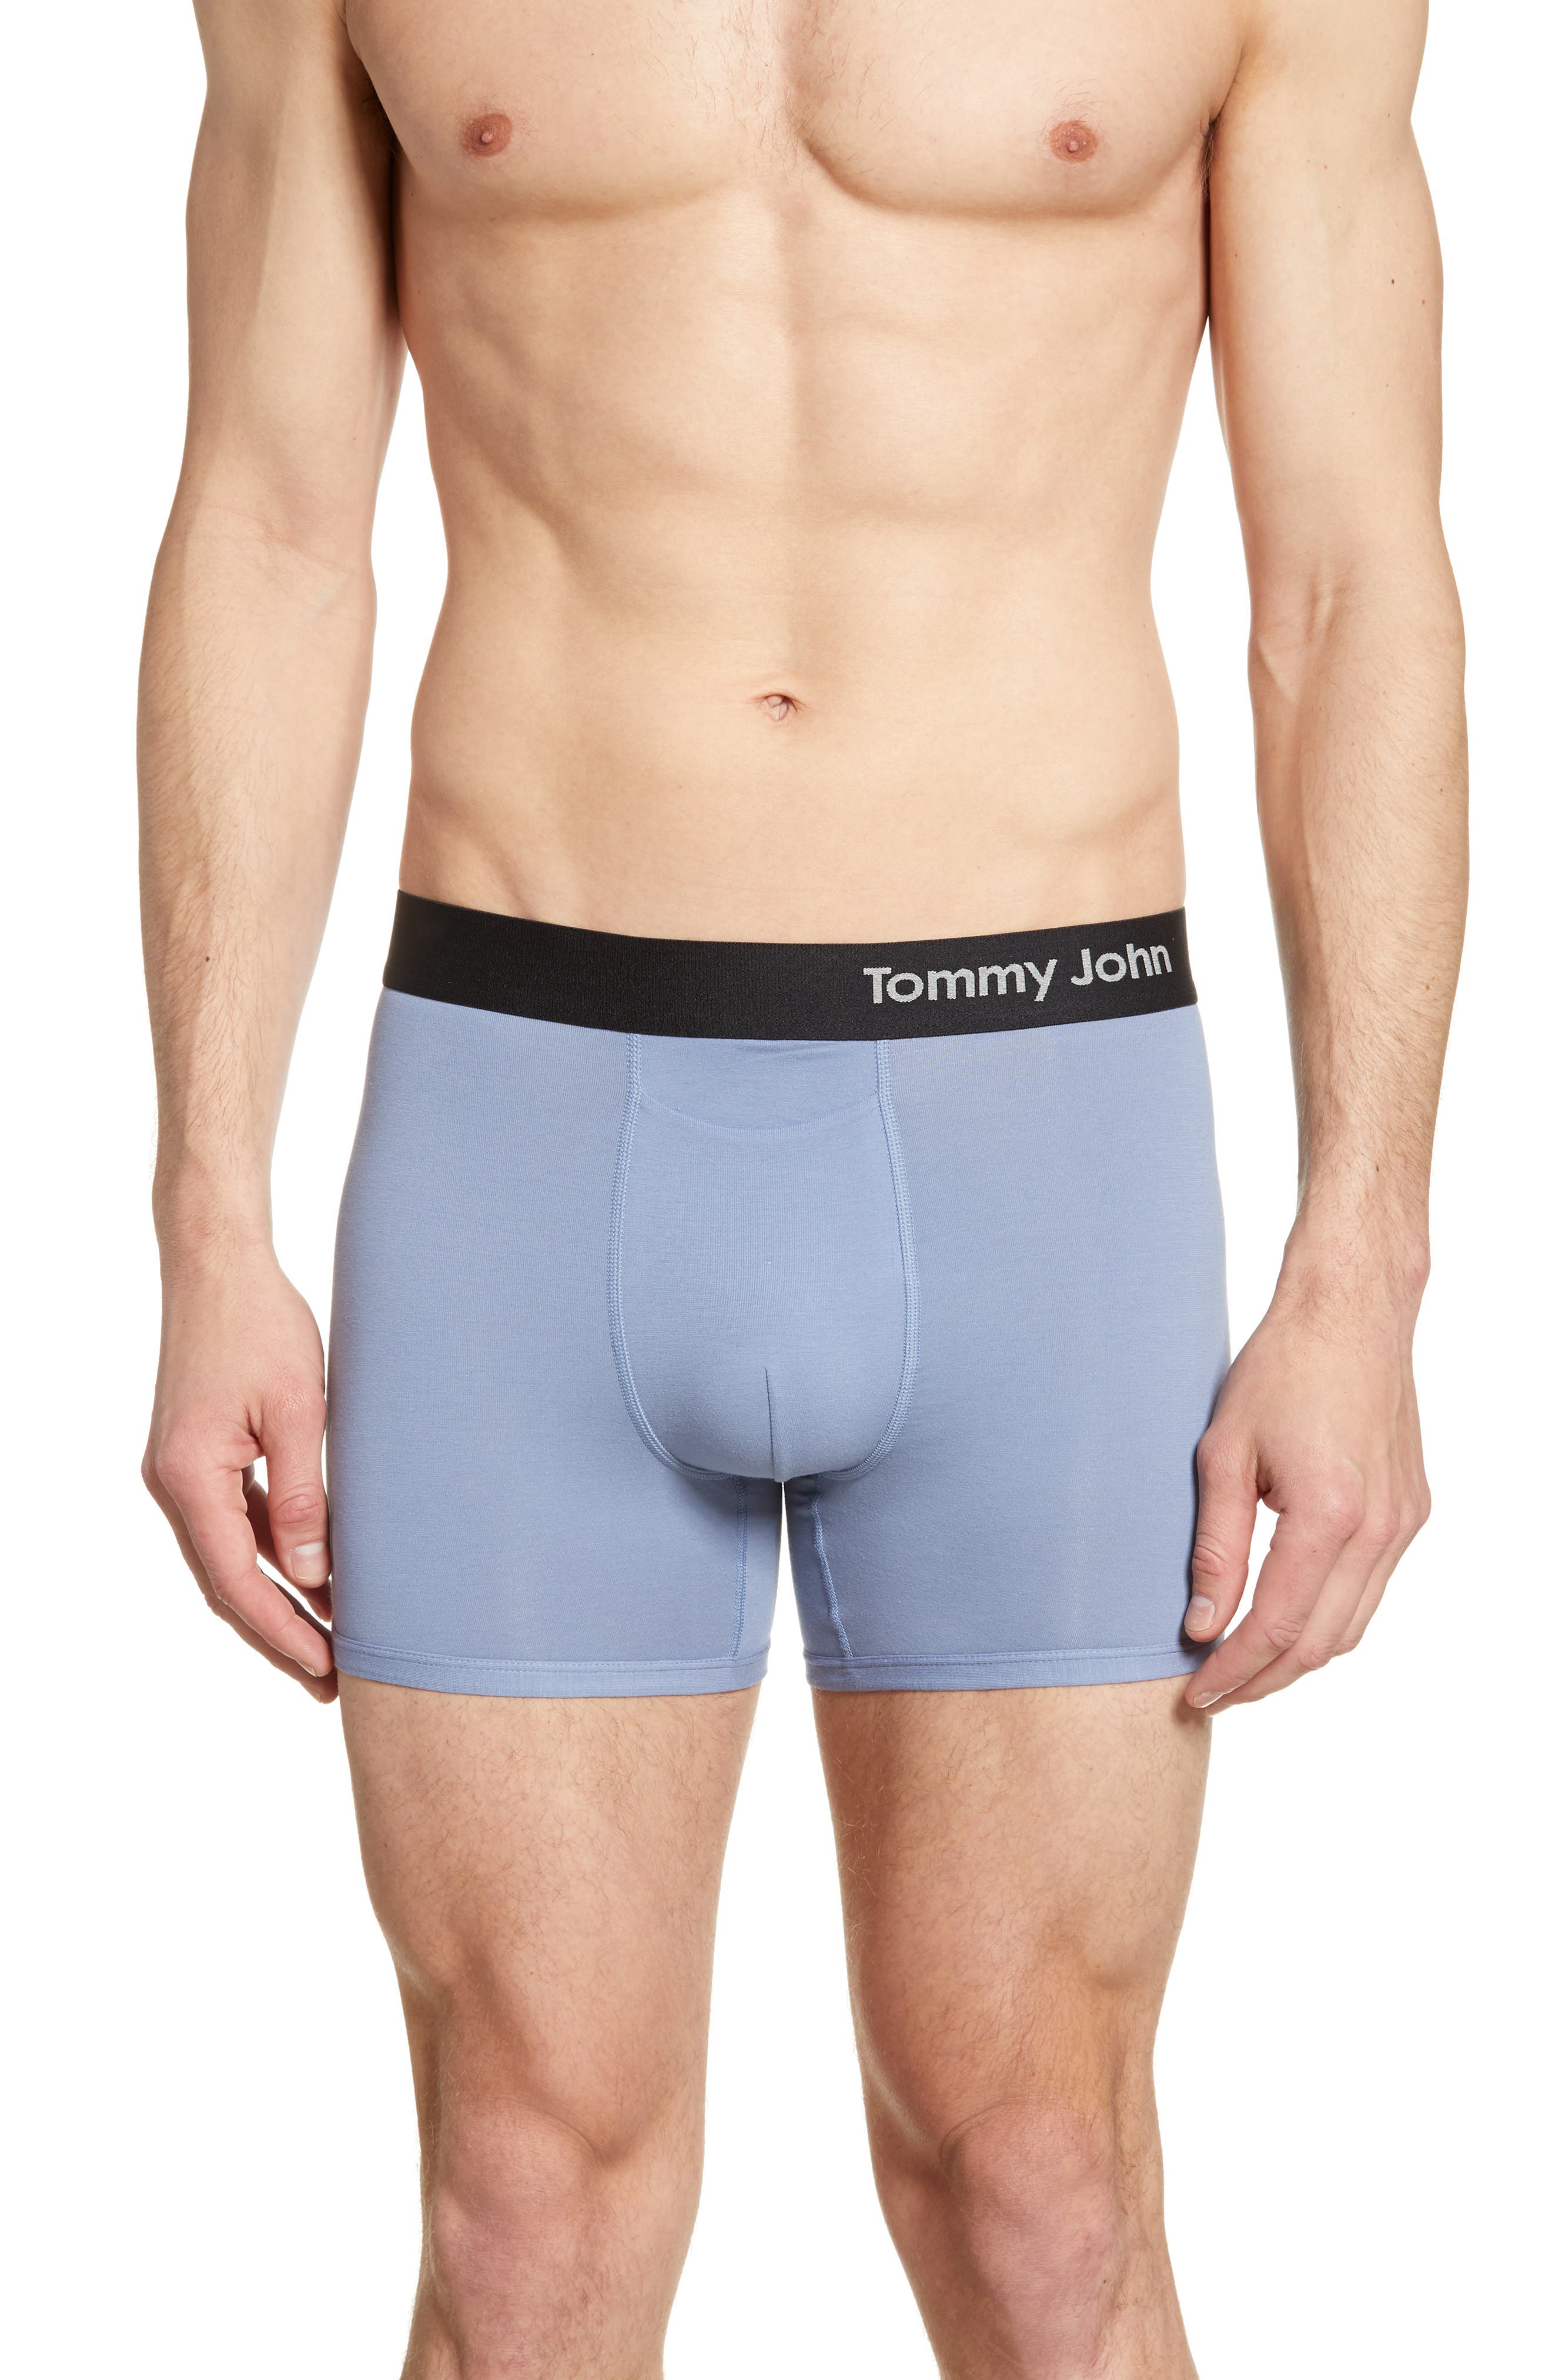 tommy john underwear nordstrom rack